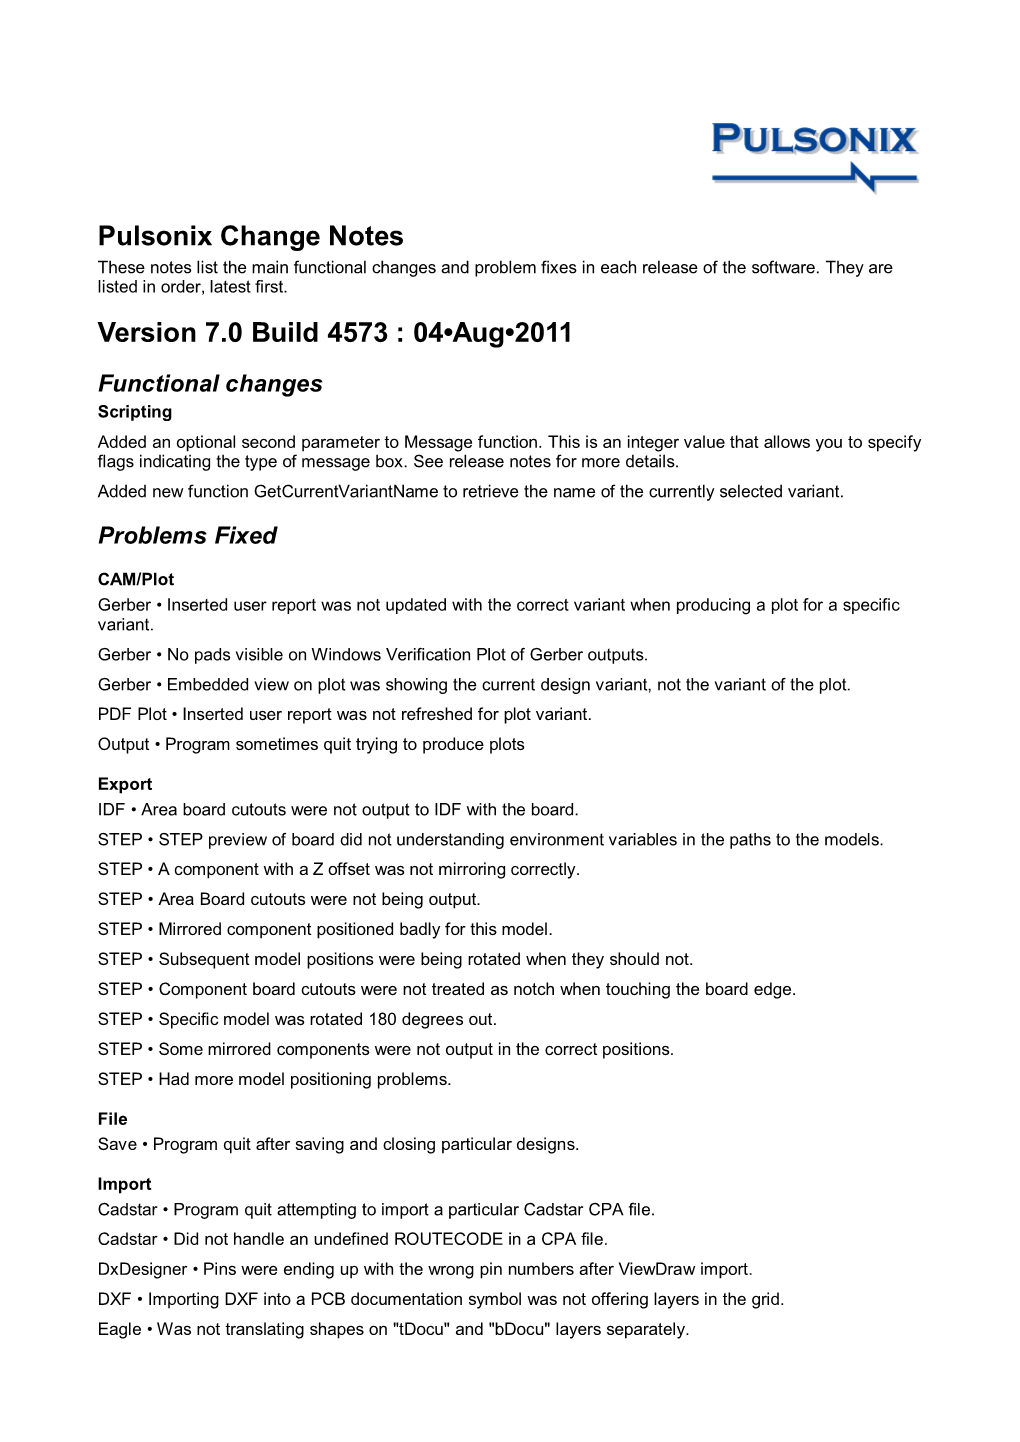 Pulsonix Change Notes Version 7.0 Build 4573 : 04-Aug-2011